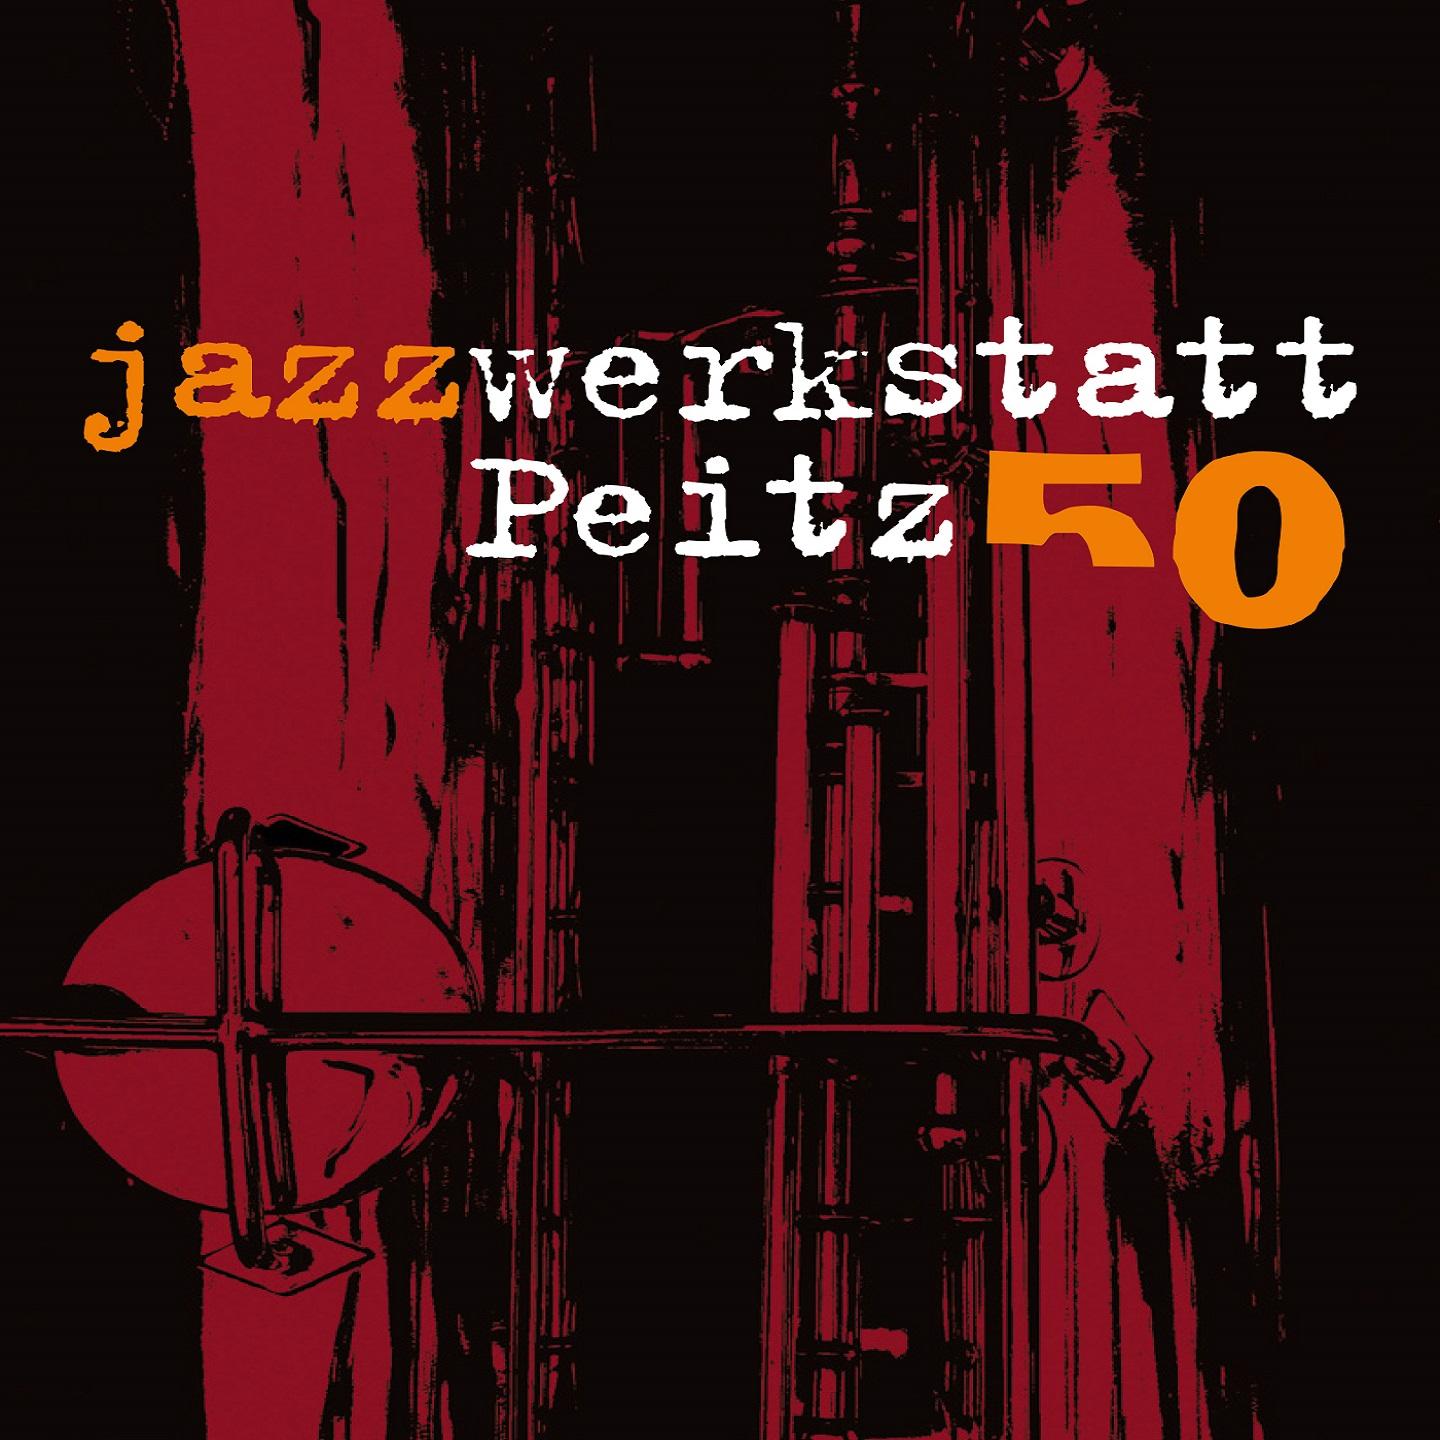 Talisker Suite I (Live at Jazzwerkstatt Peitz No. 40, 17/04/1981)